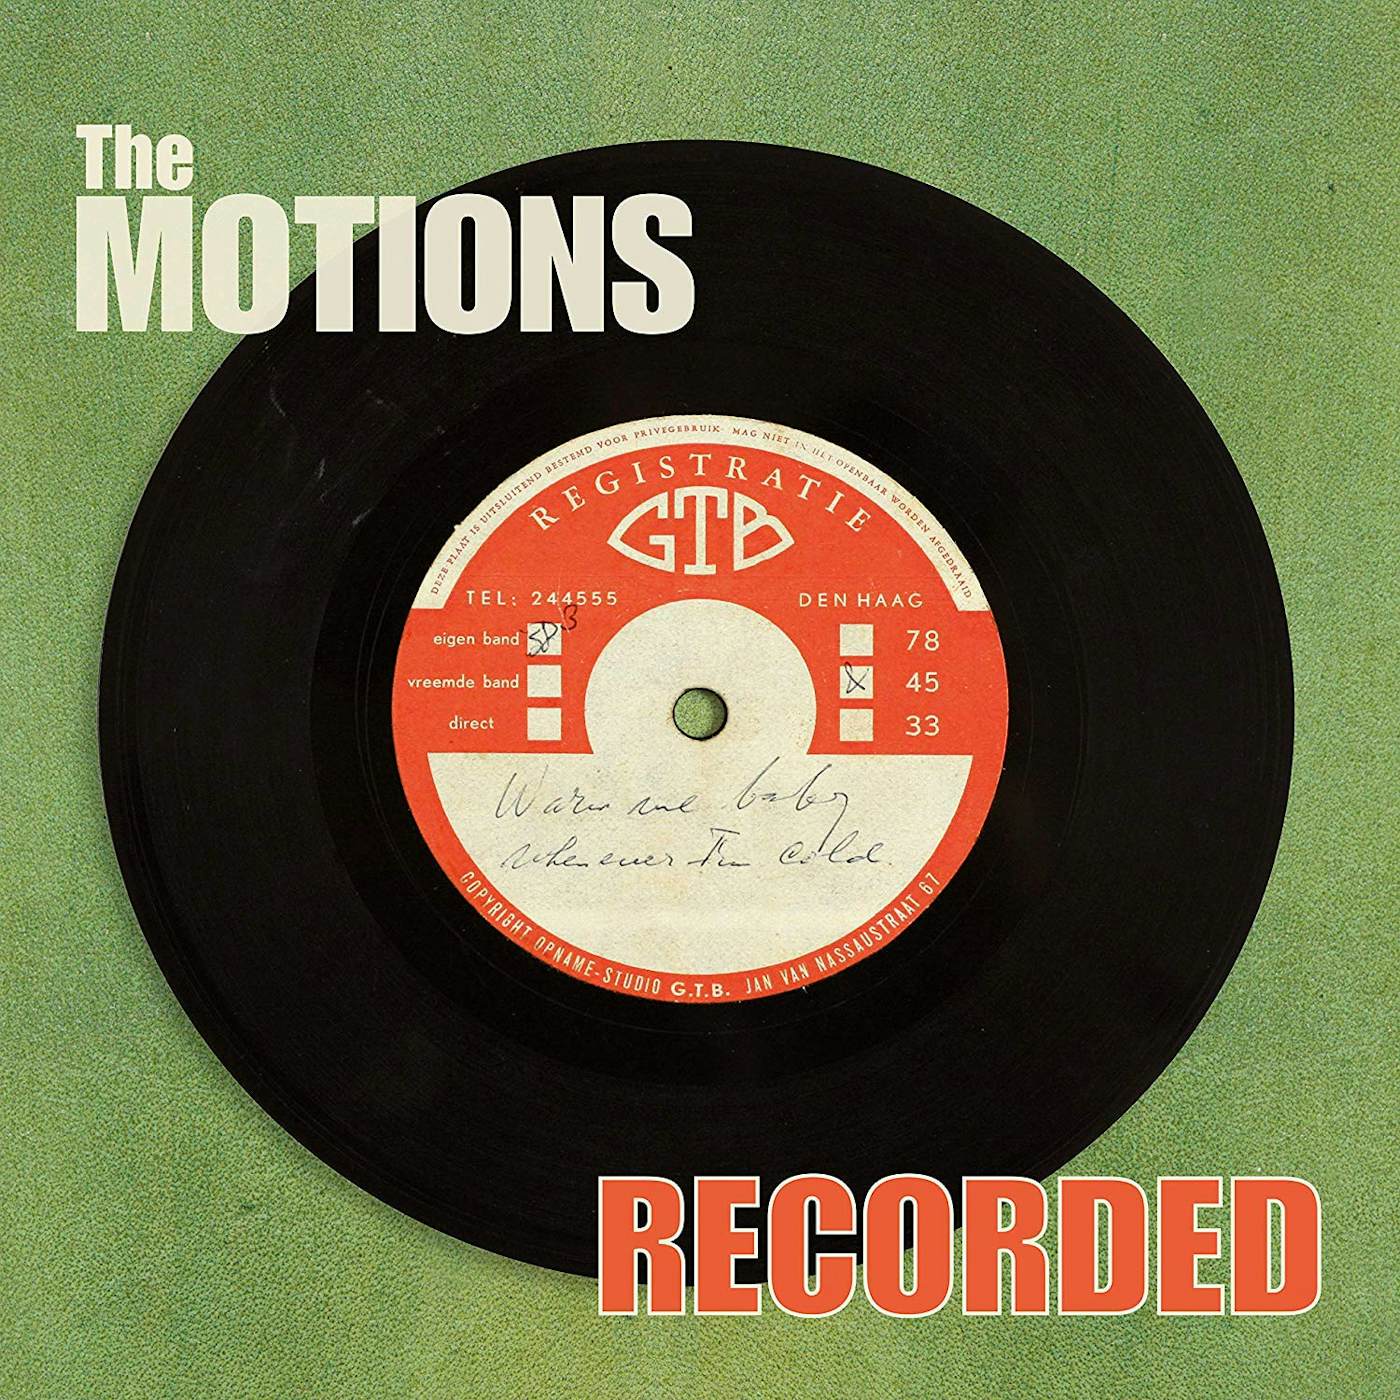 Motions Recorded Vinyl Record